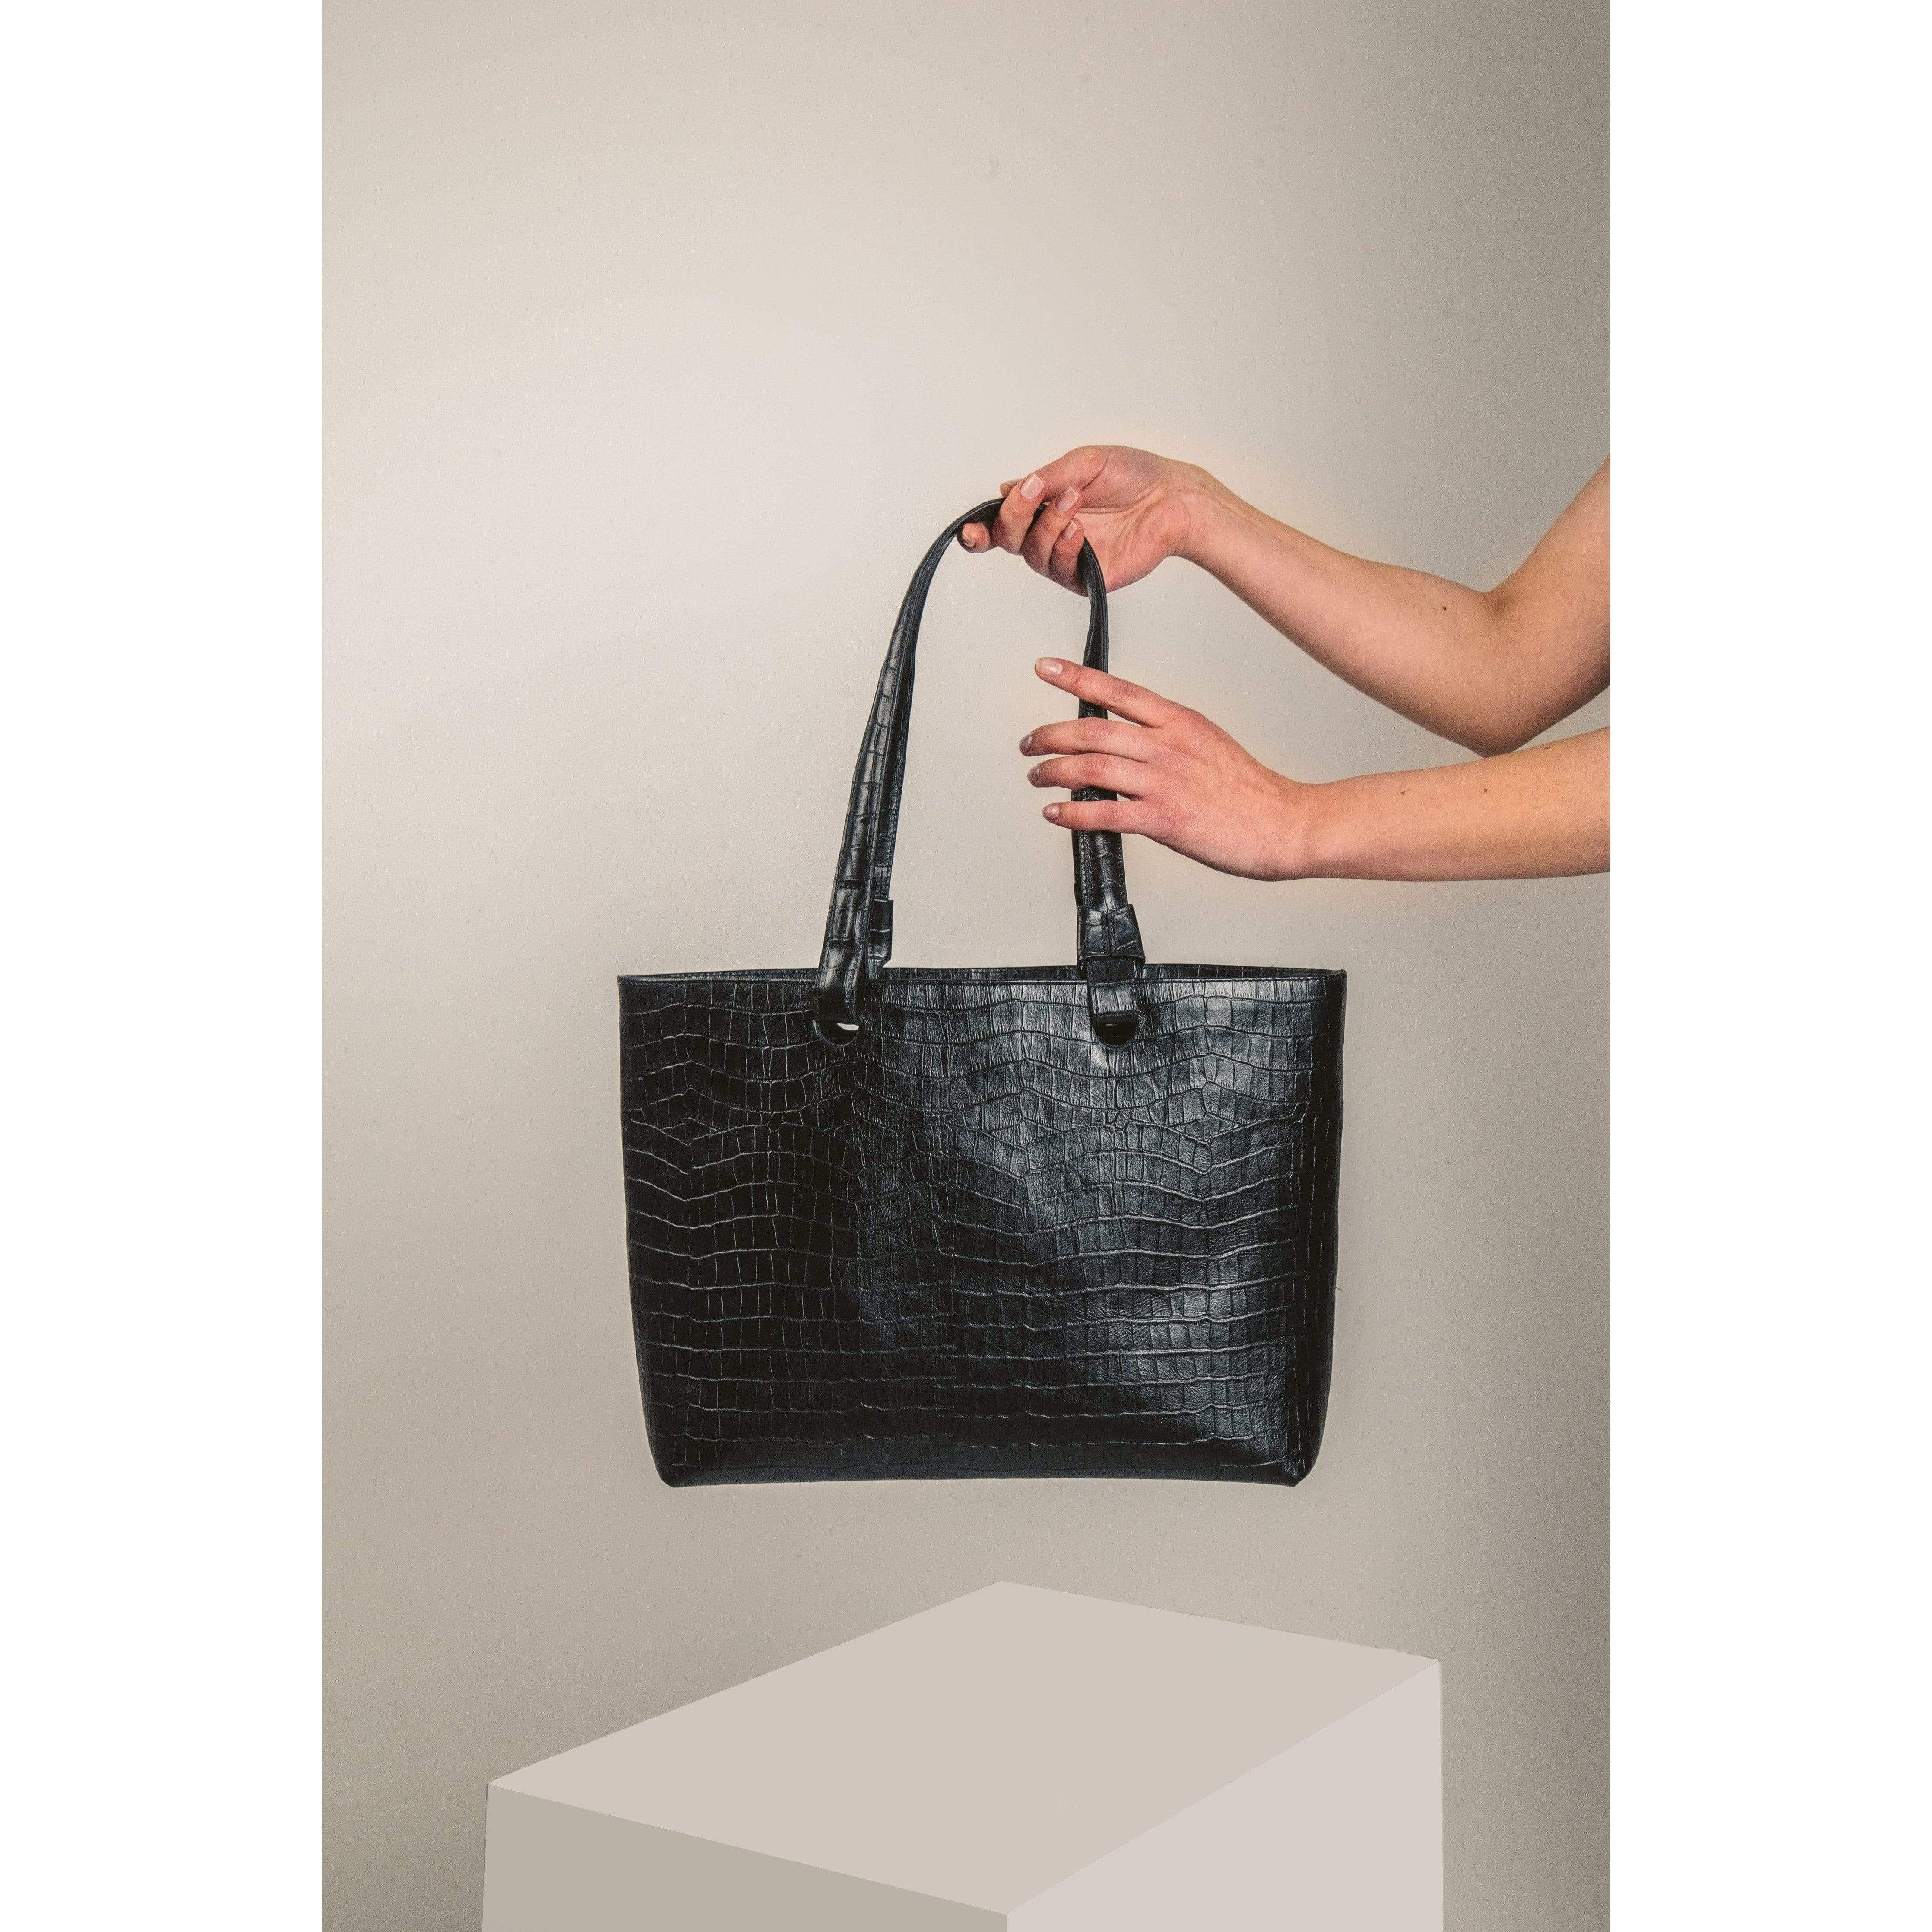 Sabbai Women's Handbag Black Shoulder Bag Tote Bag Leather